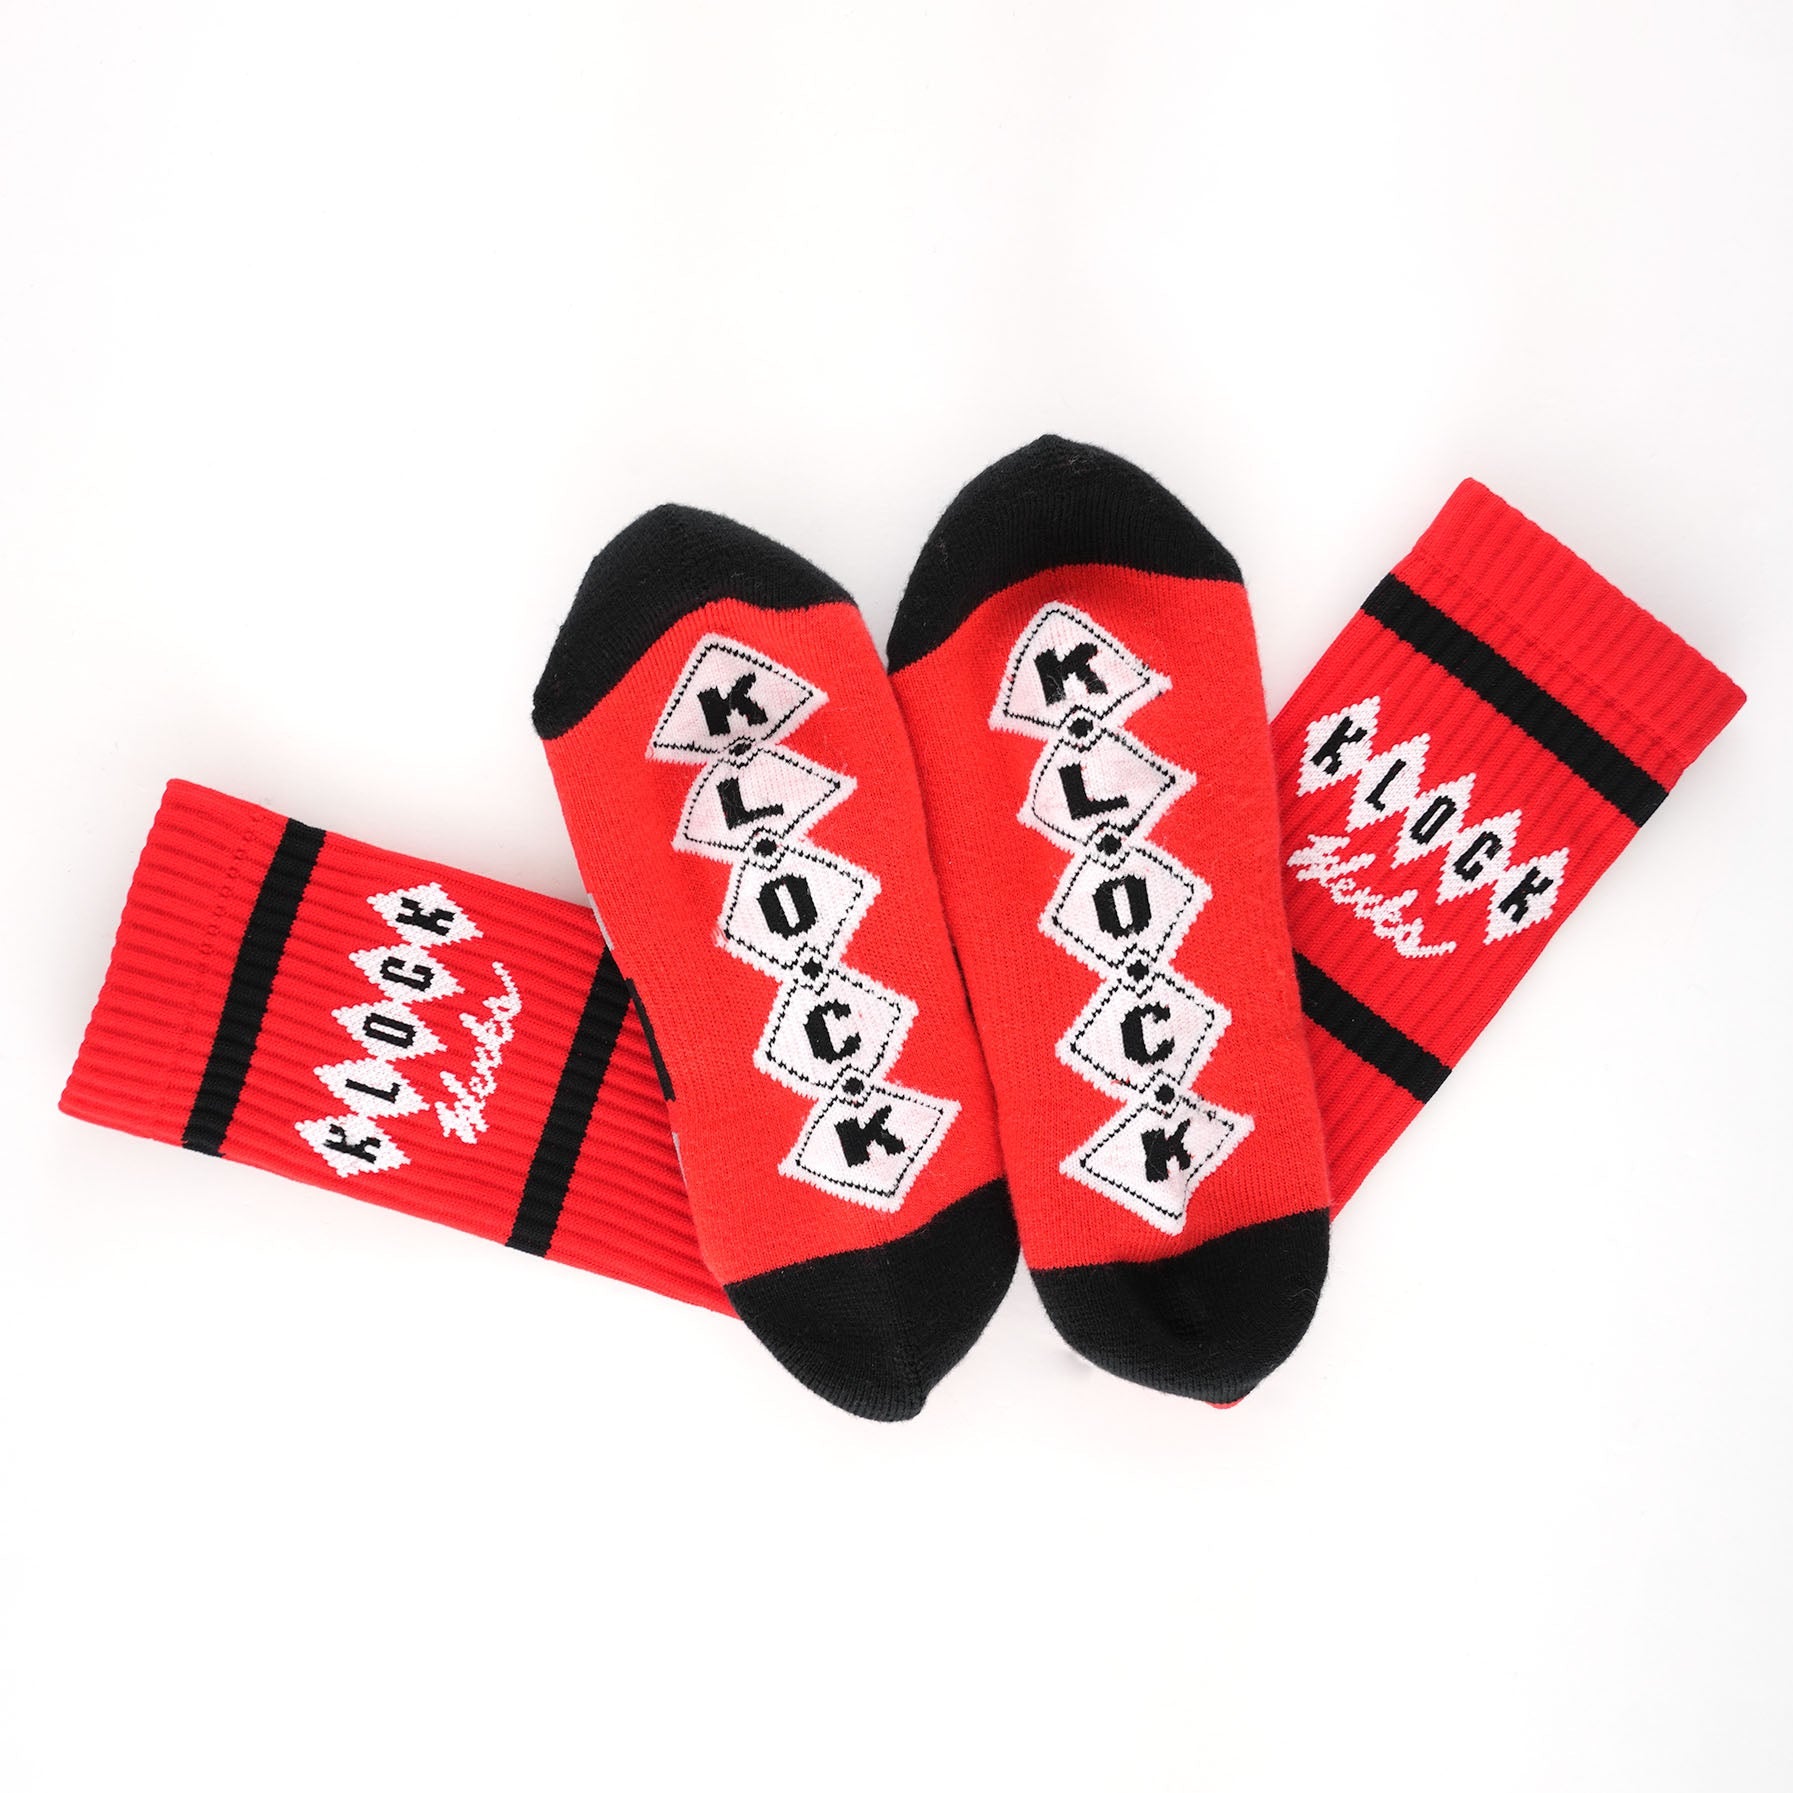 Klock Werks x Fuel Klock Crew Socks in Red with Klock on the feet(Red with Klock on the feet)